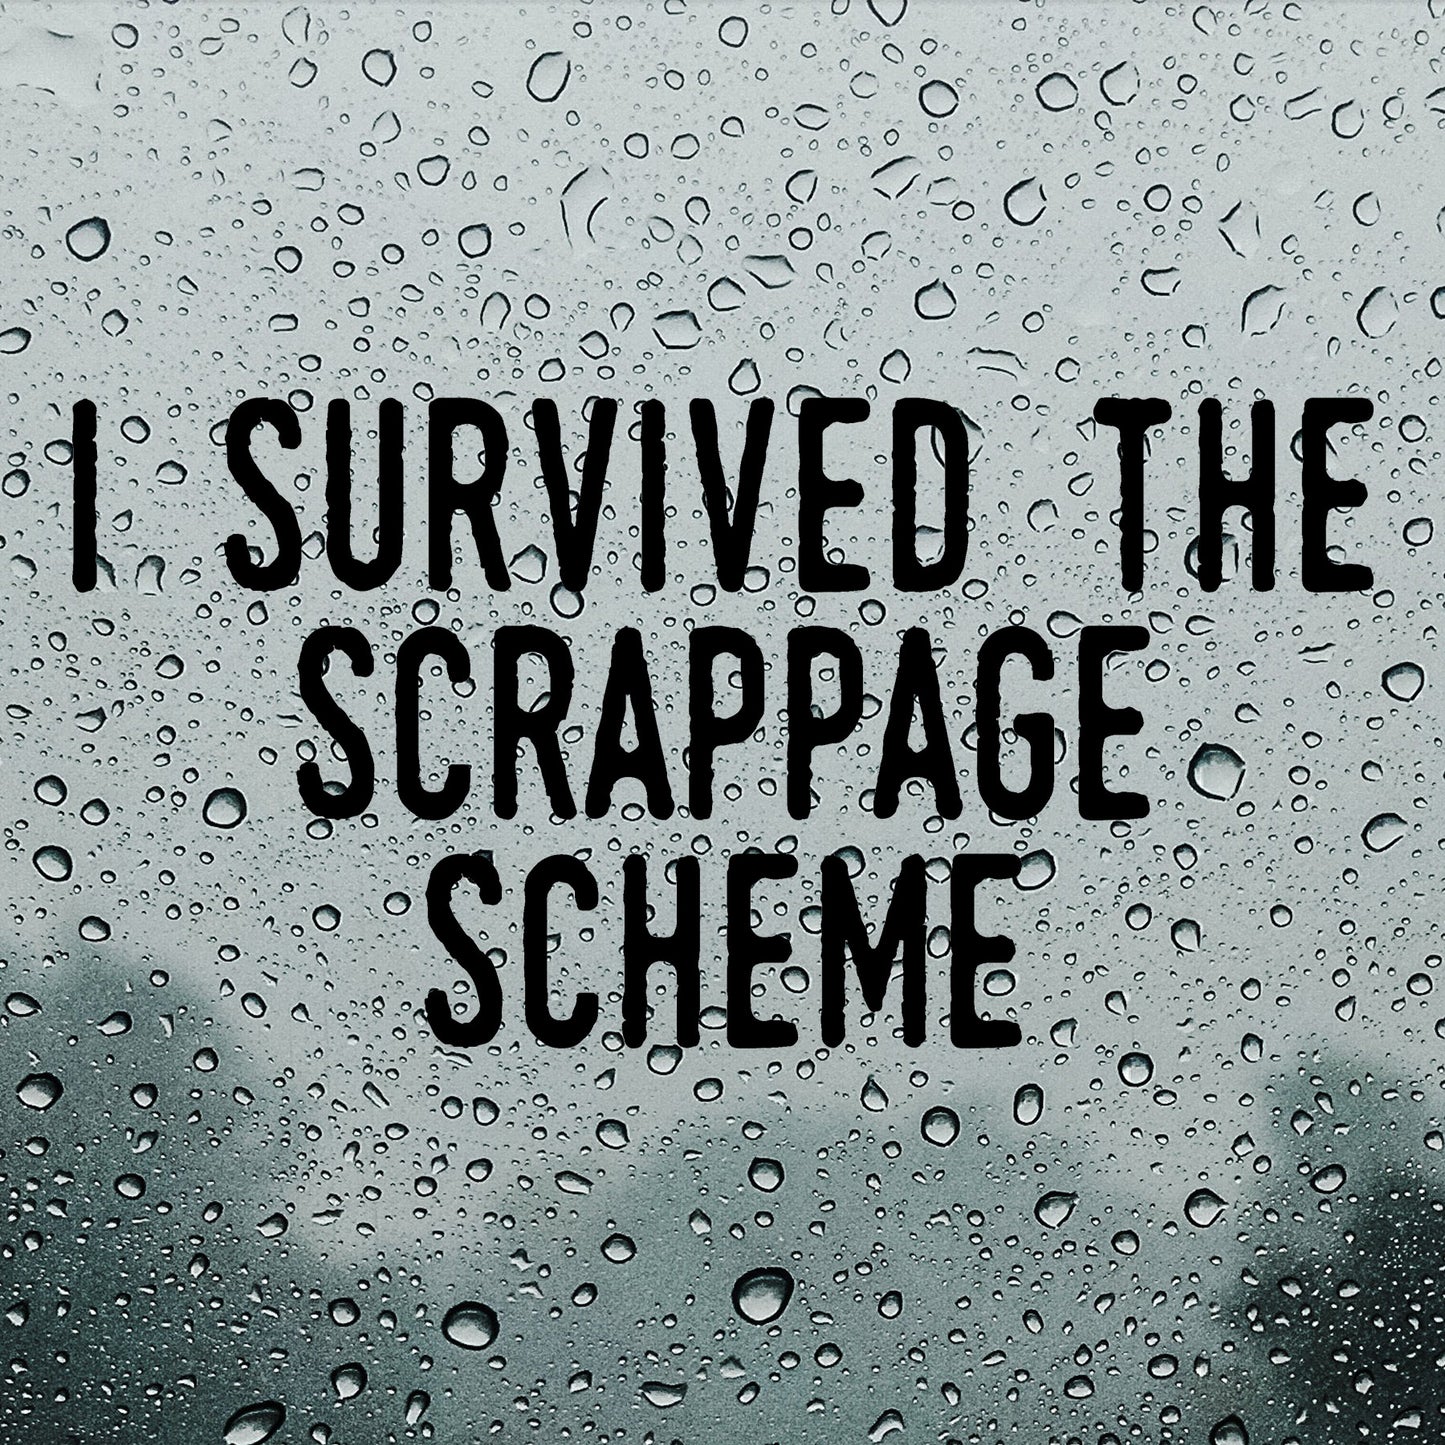 I survived the scrappage scheme | Bumper sticker - Adnil Creations